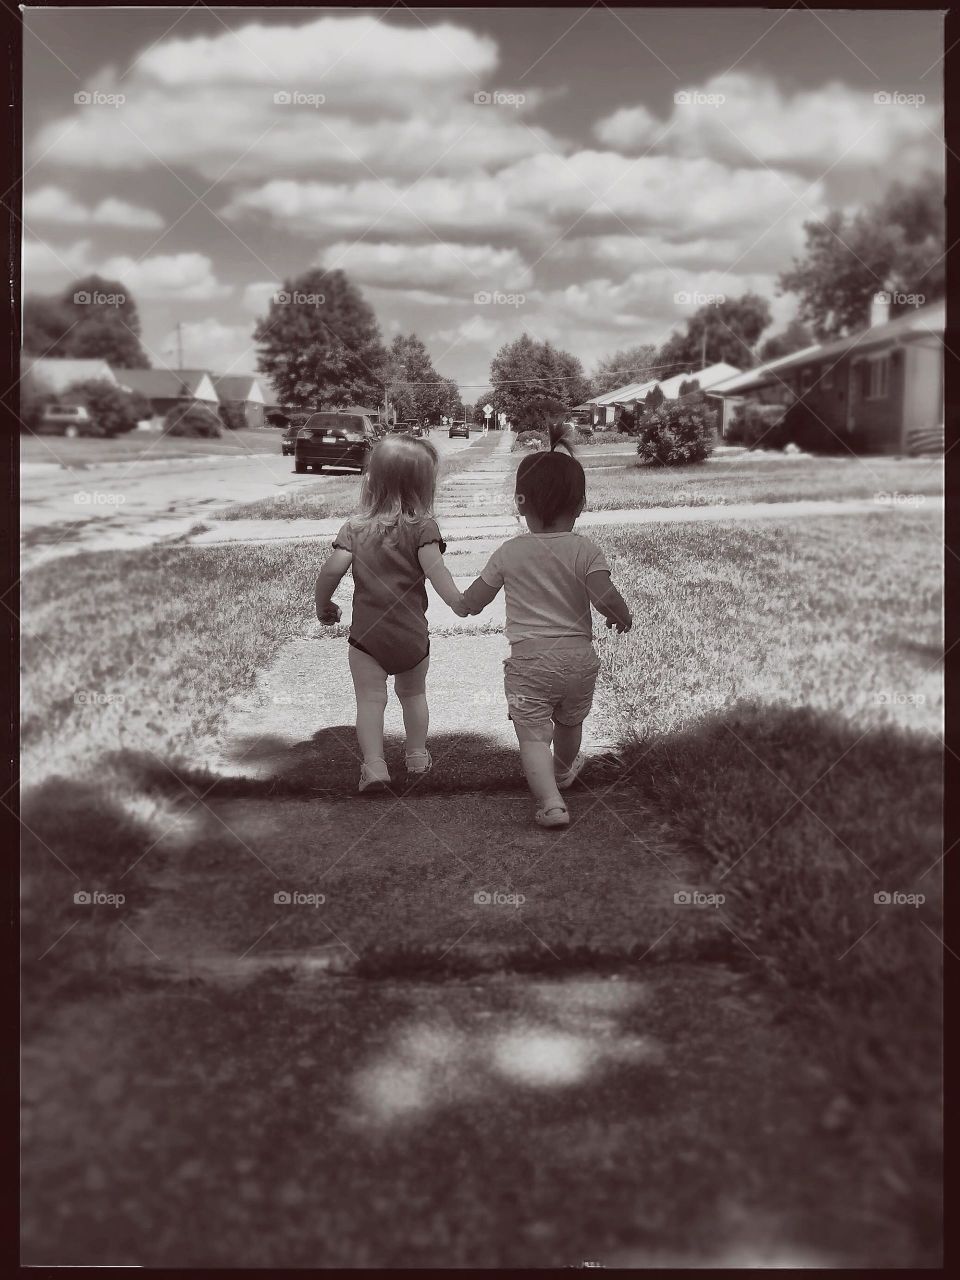 A walk together